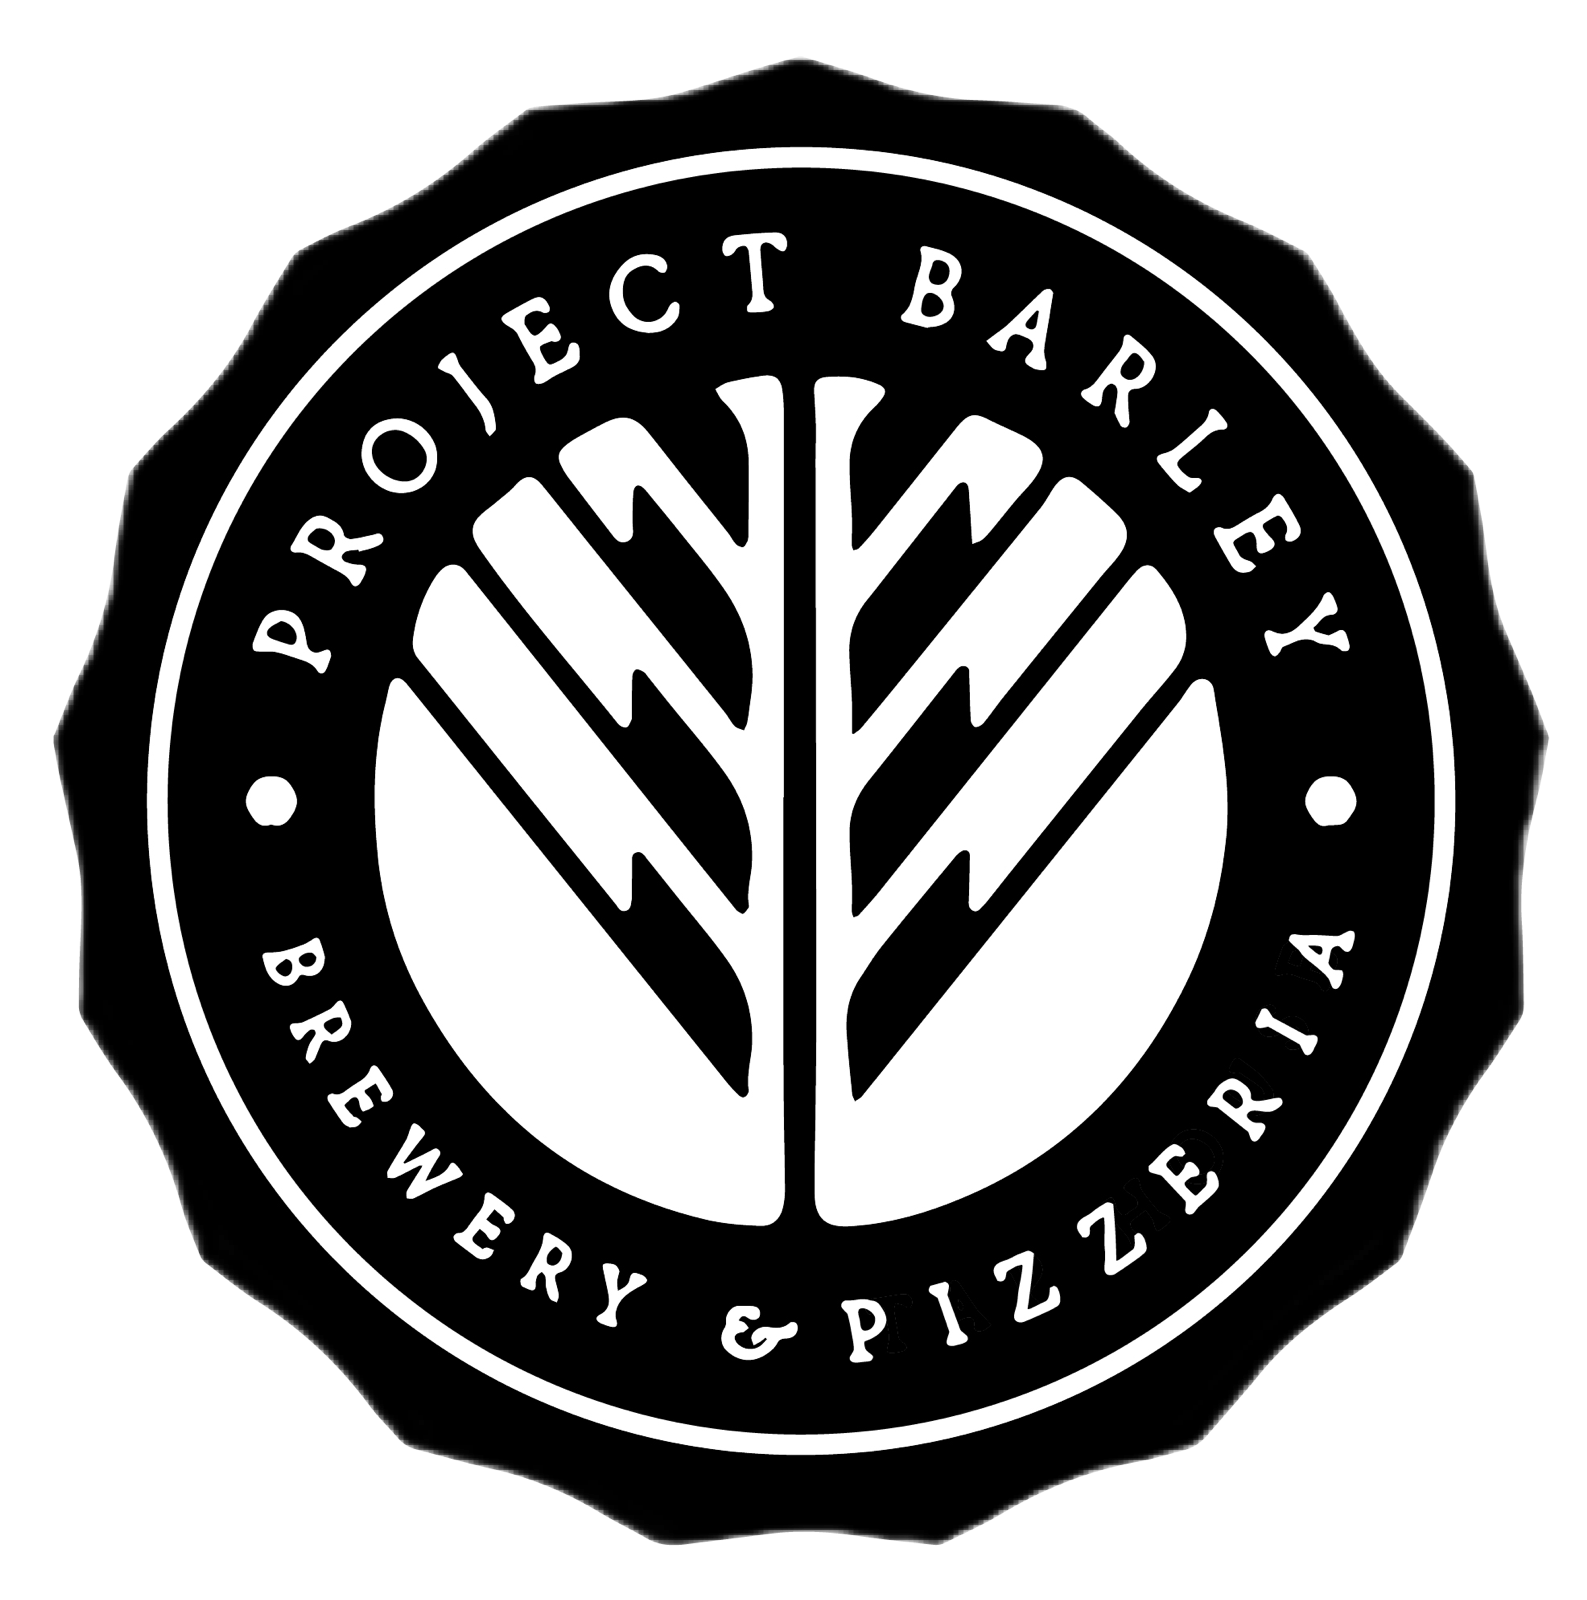 Project Barley